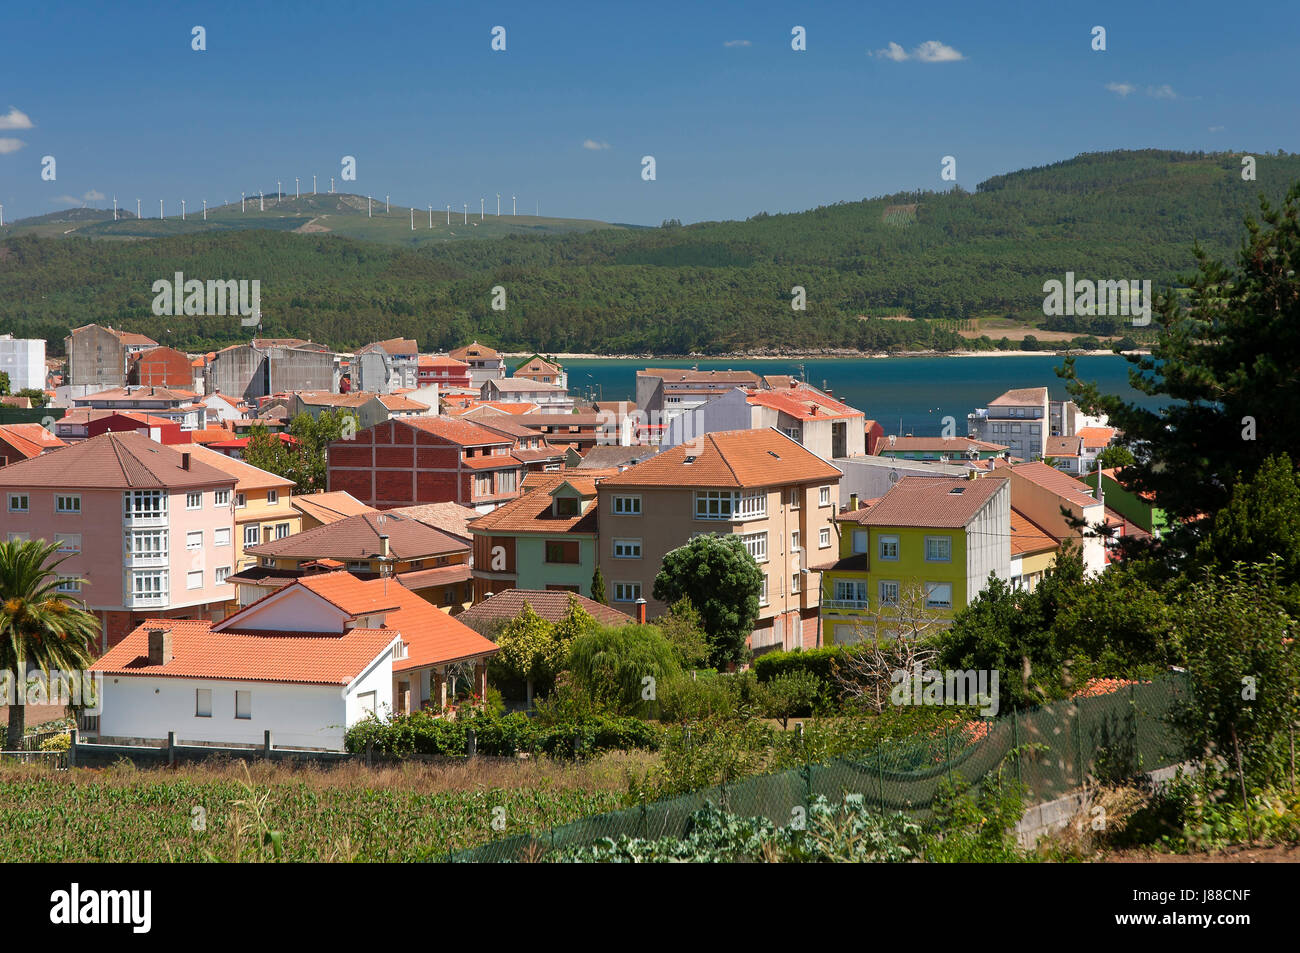 Village and landscape, Camarinas, La Coruna province, Region of Galicia, Spain, Europe Stock Photo